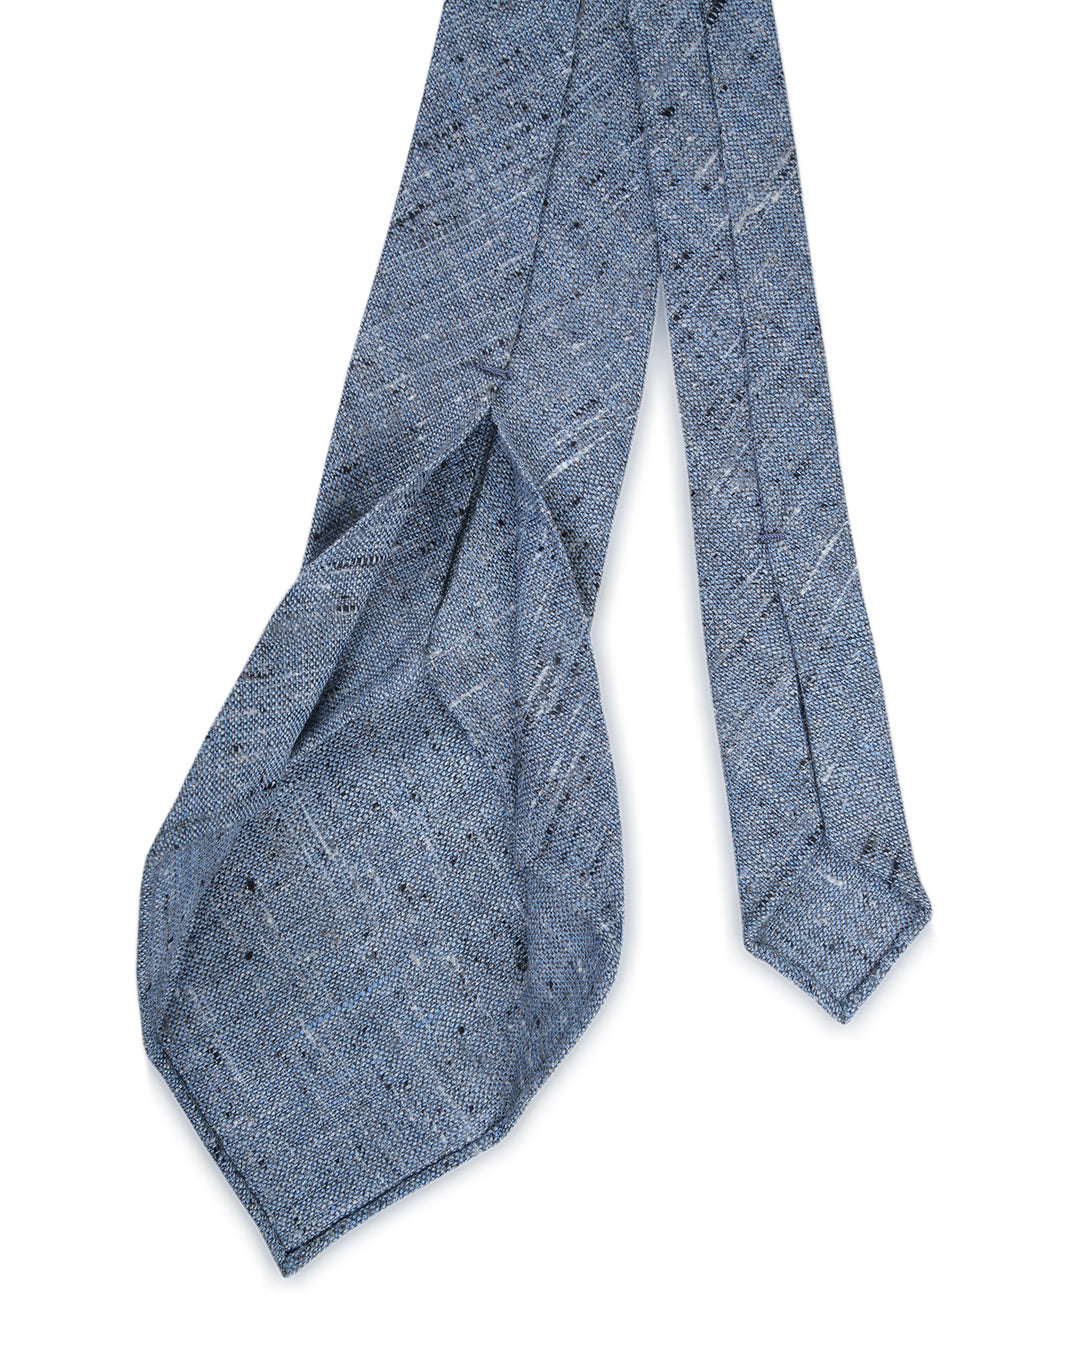 EThomas Sky Blue Textured Tie